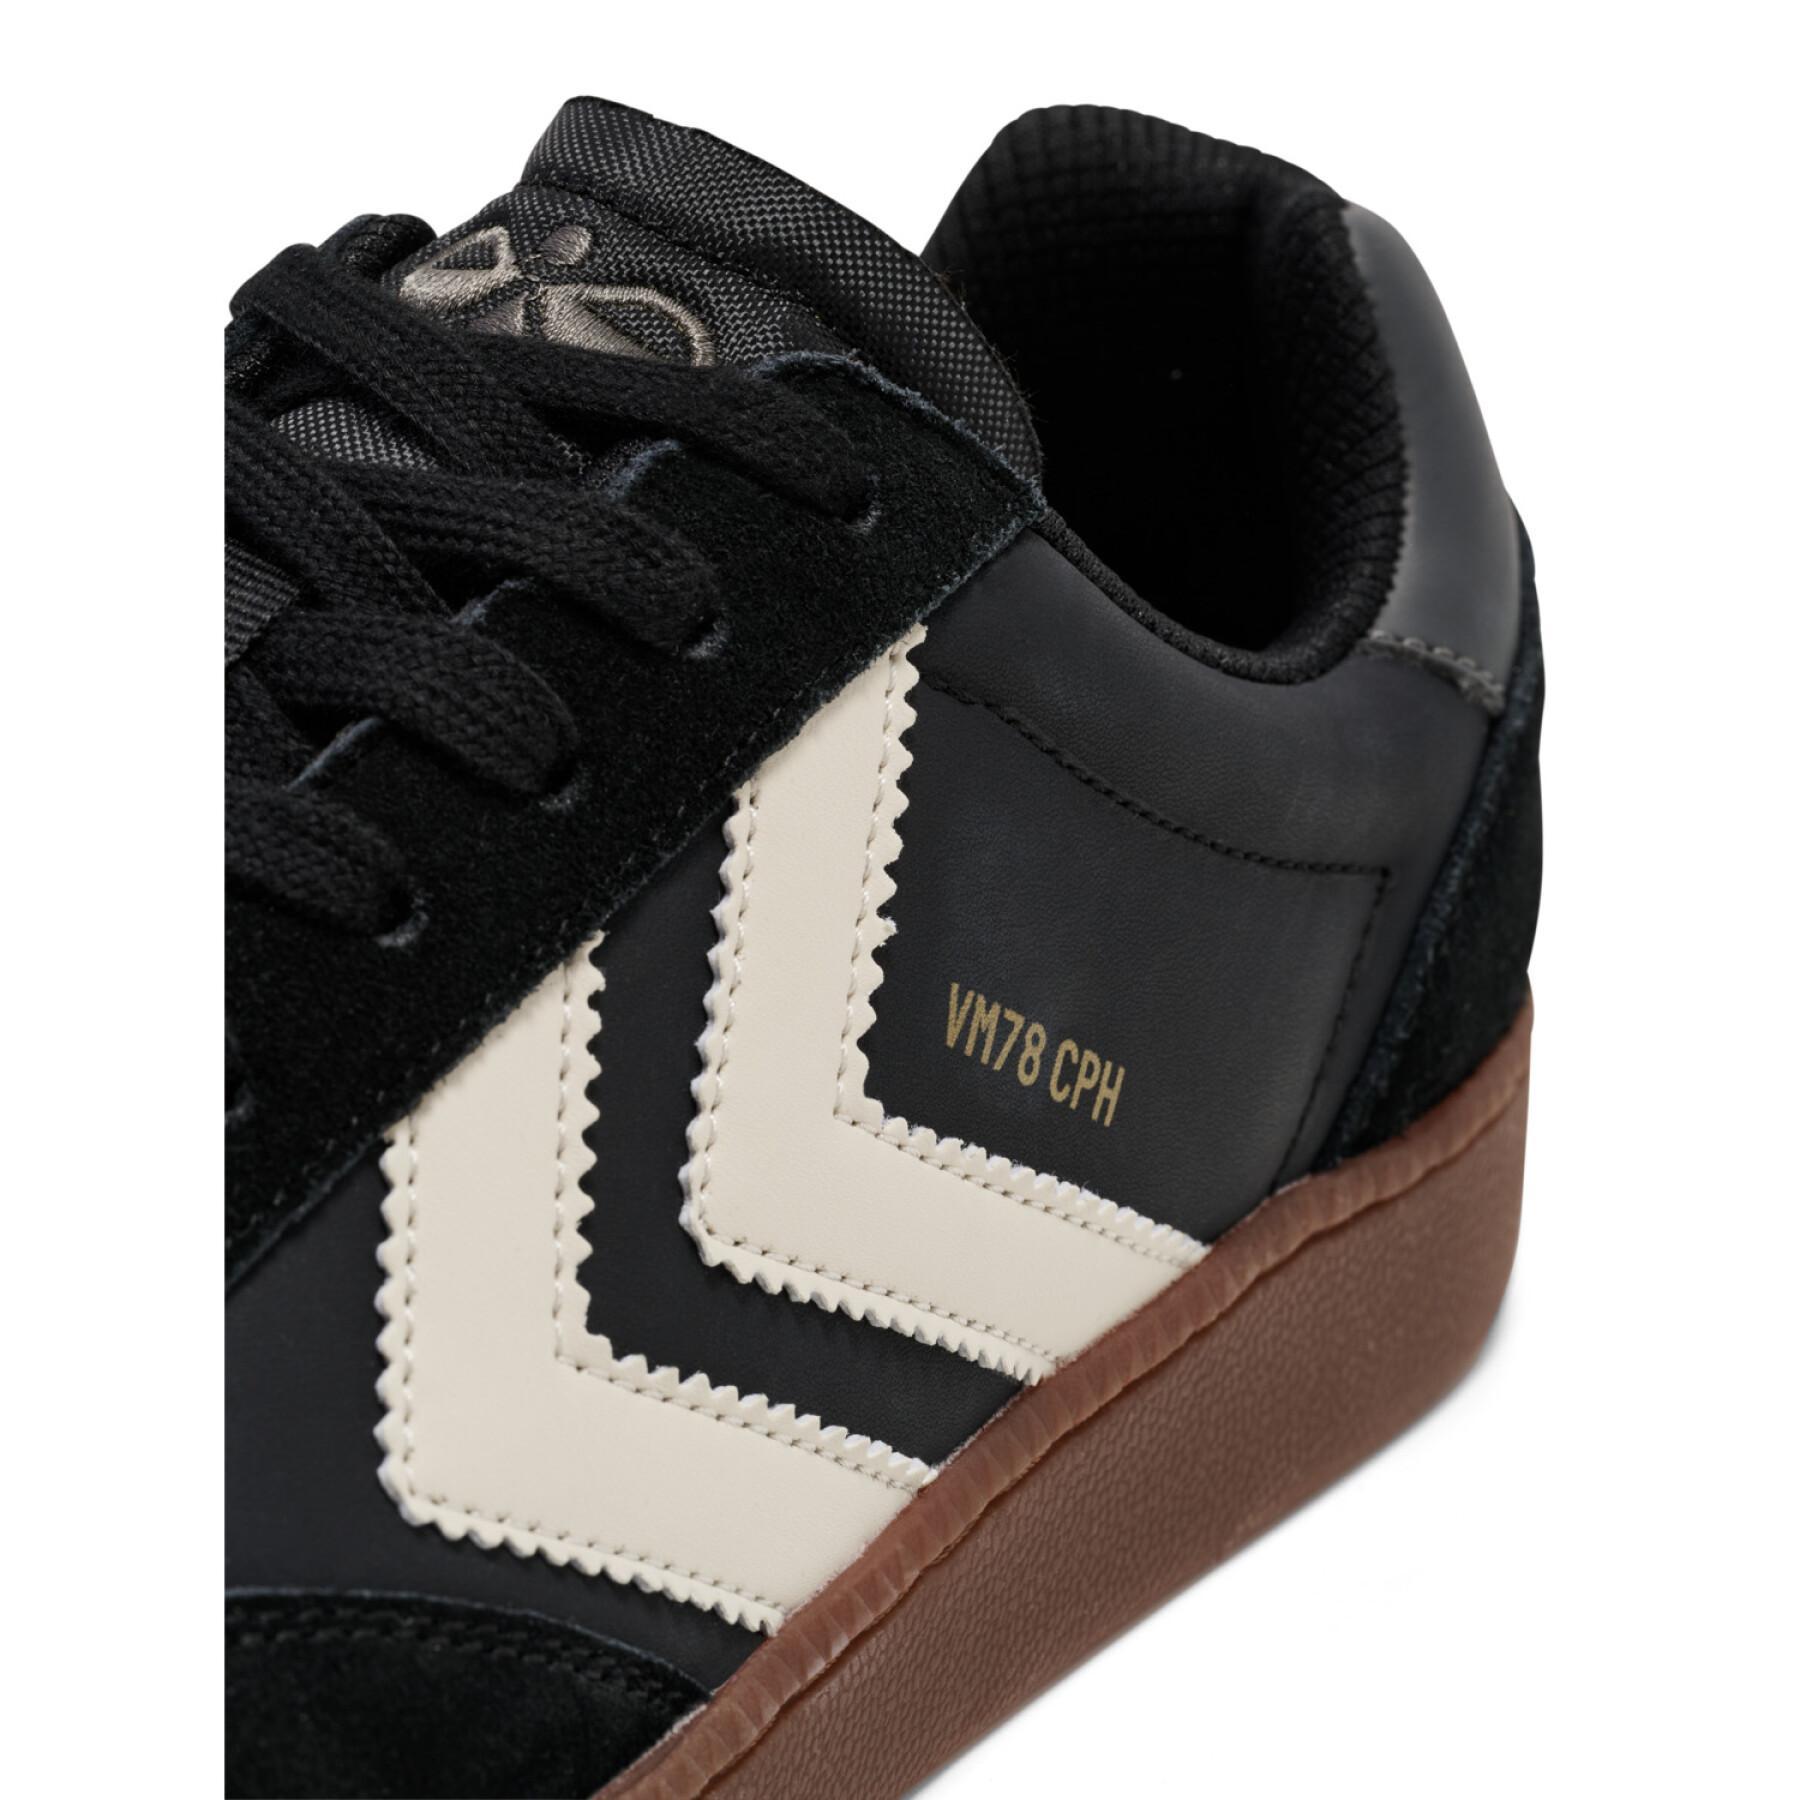 Sneakers Hummel Vm78 CPH ML